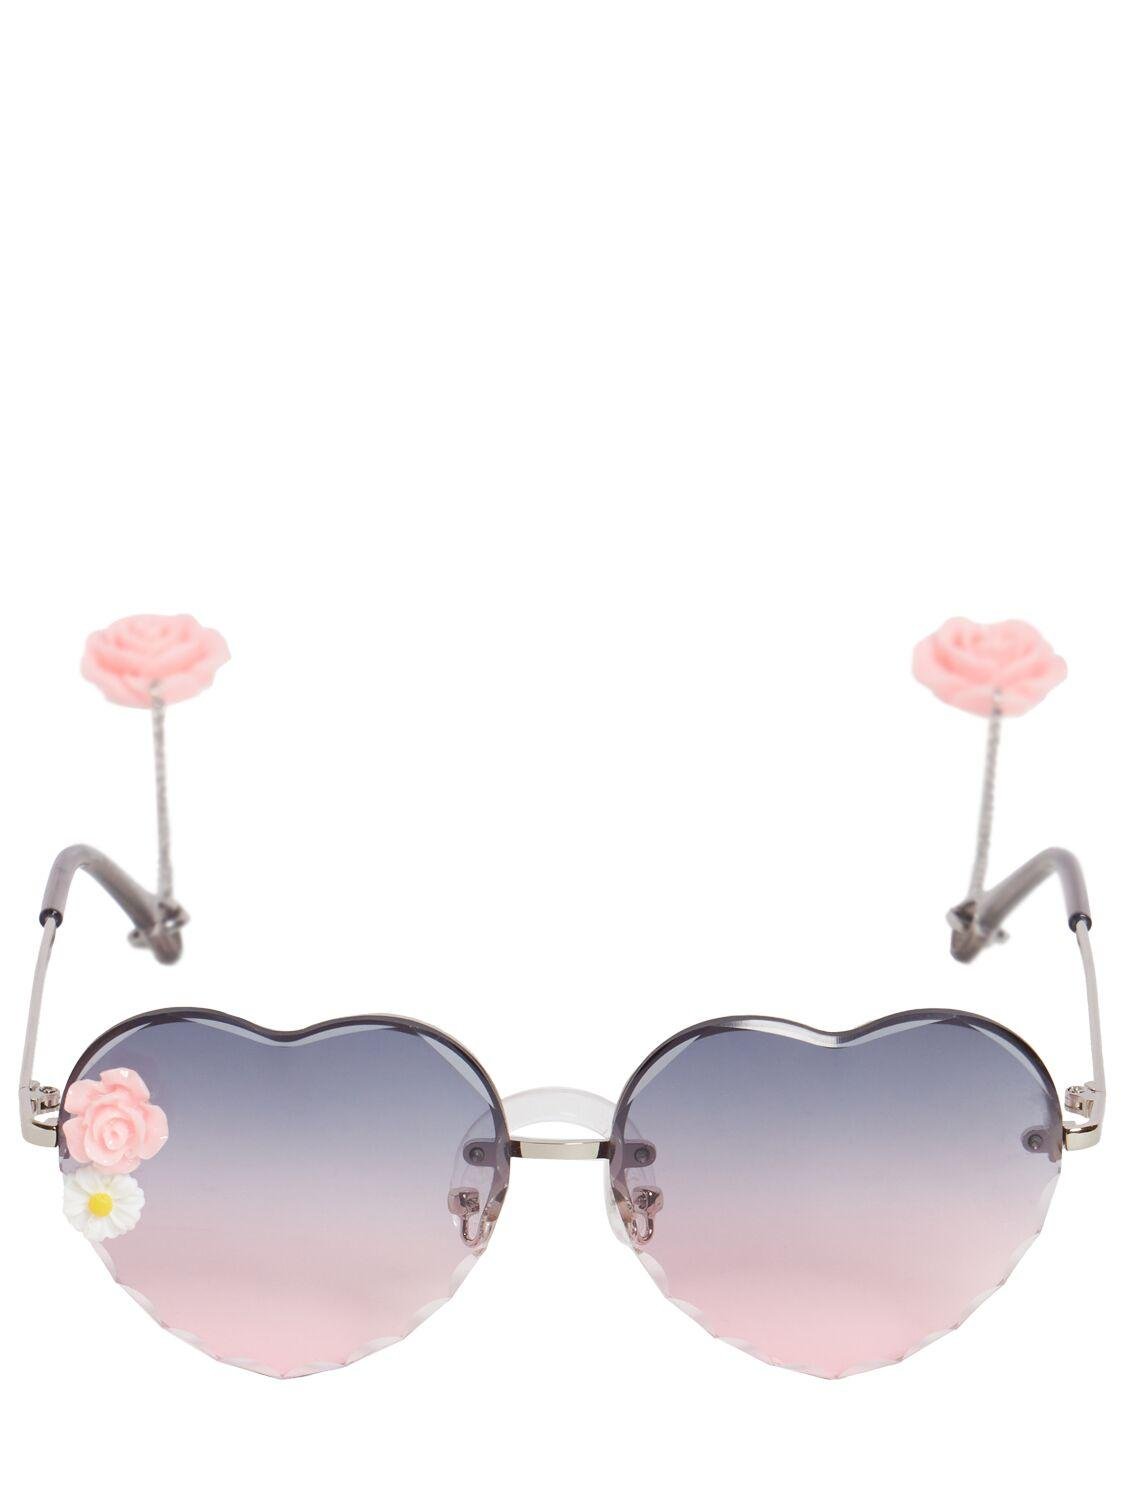 Embellished Heart Sunglasses by MONNALISA